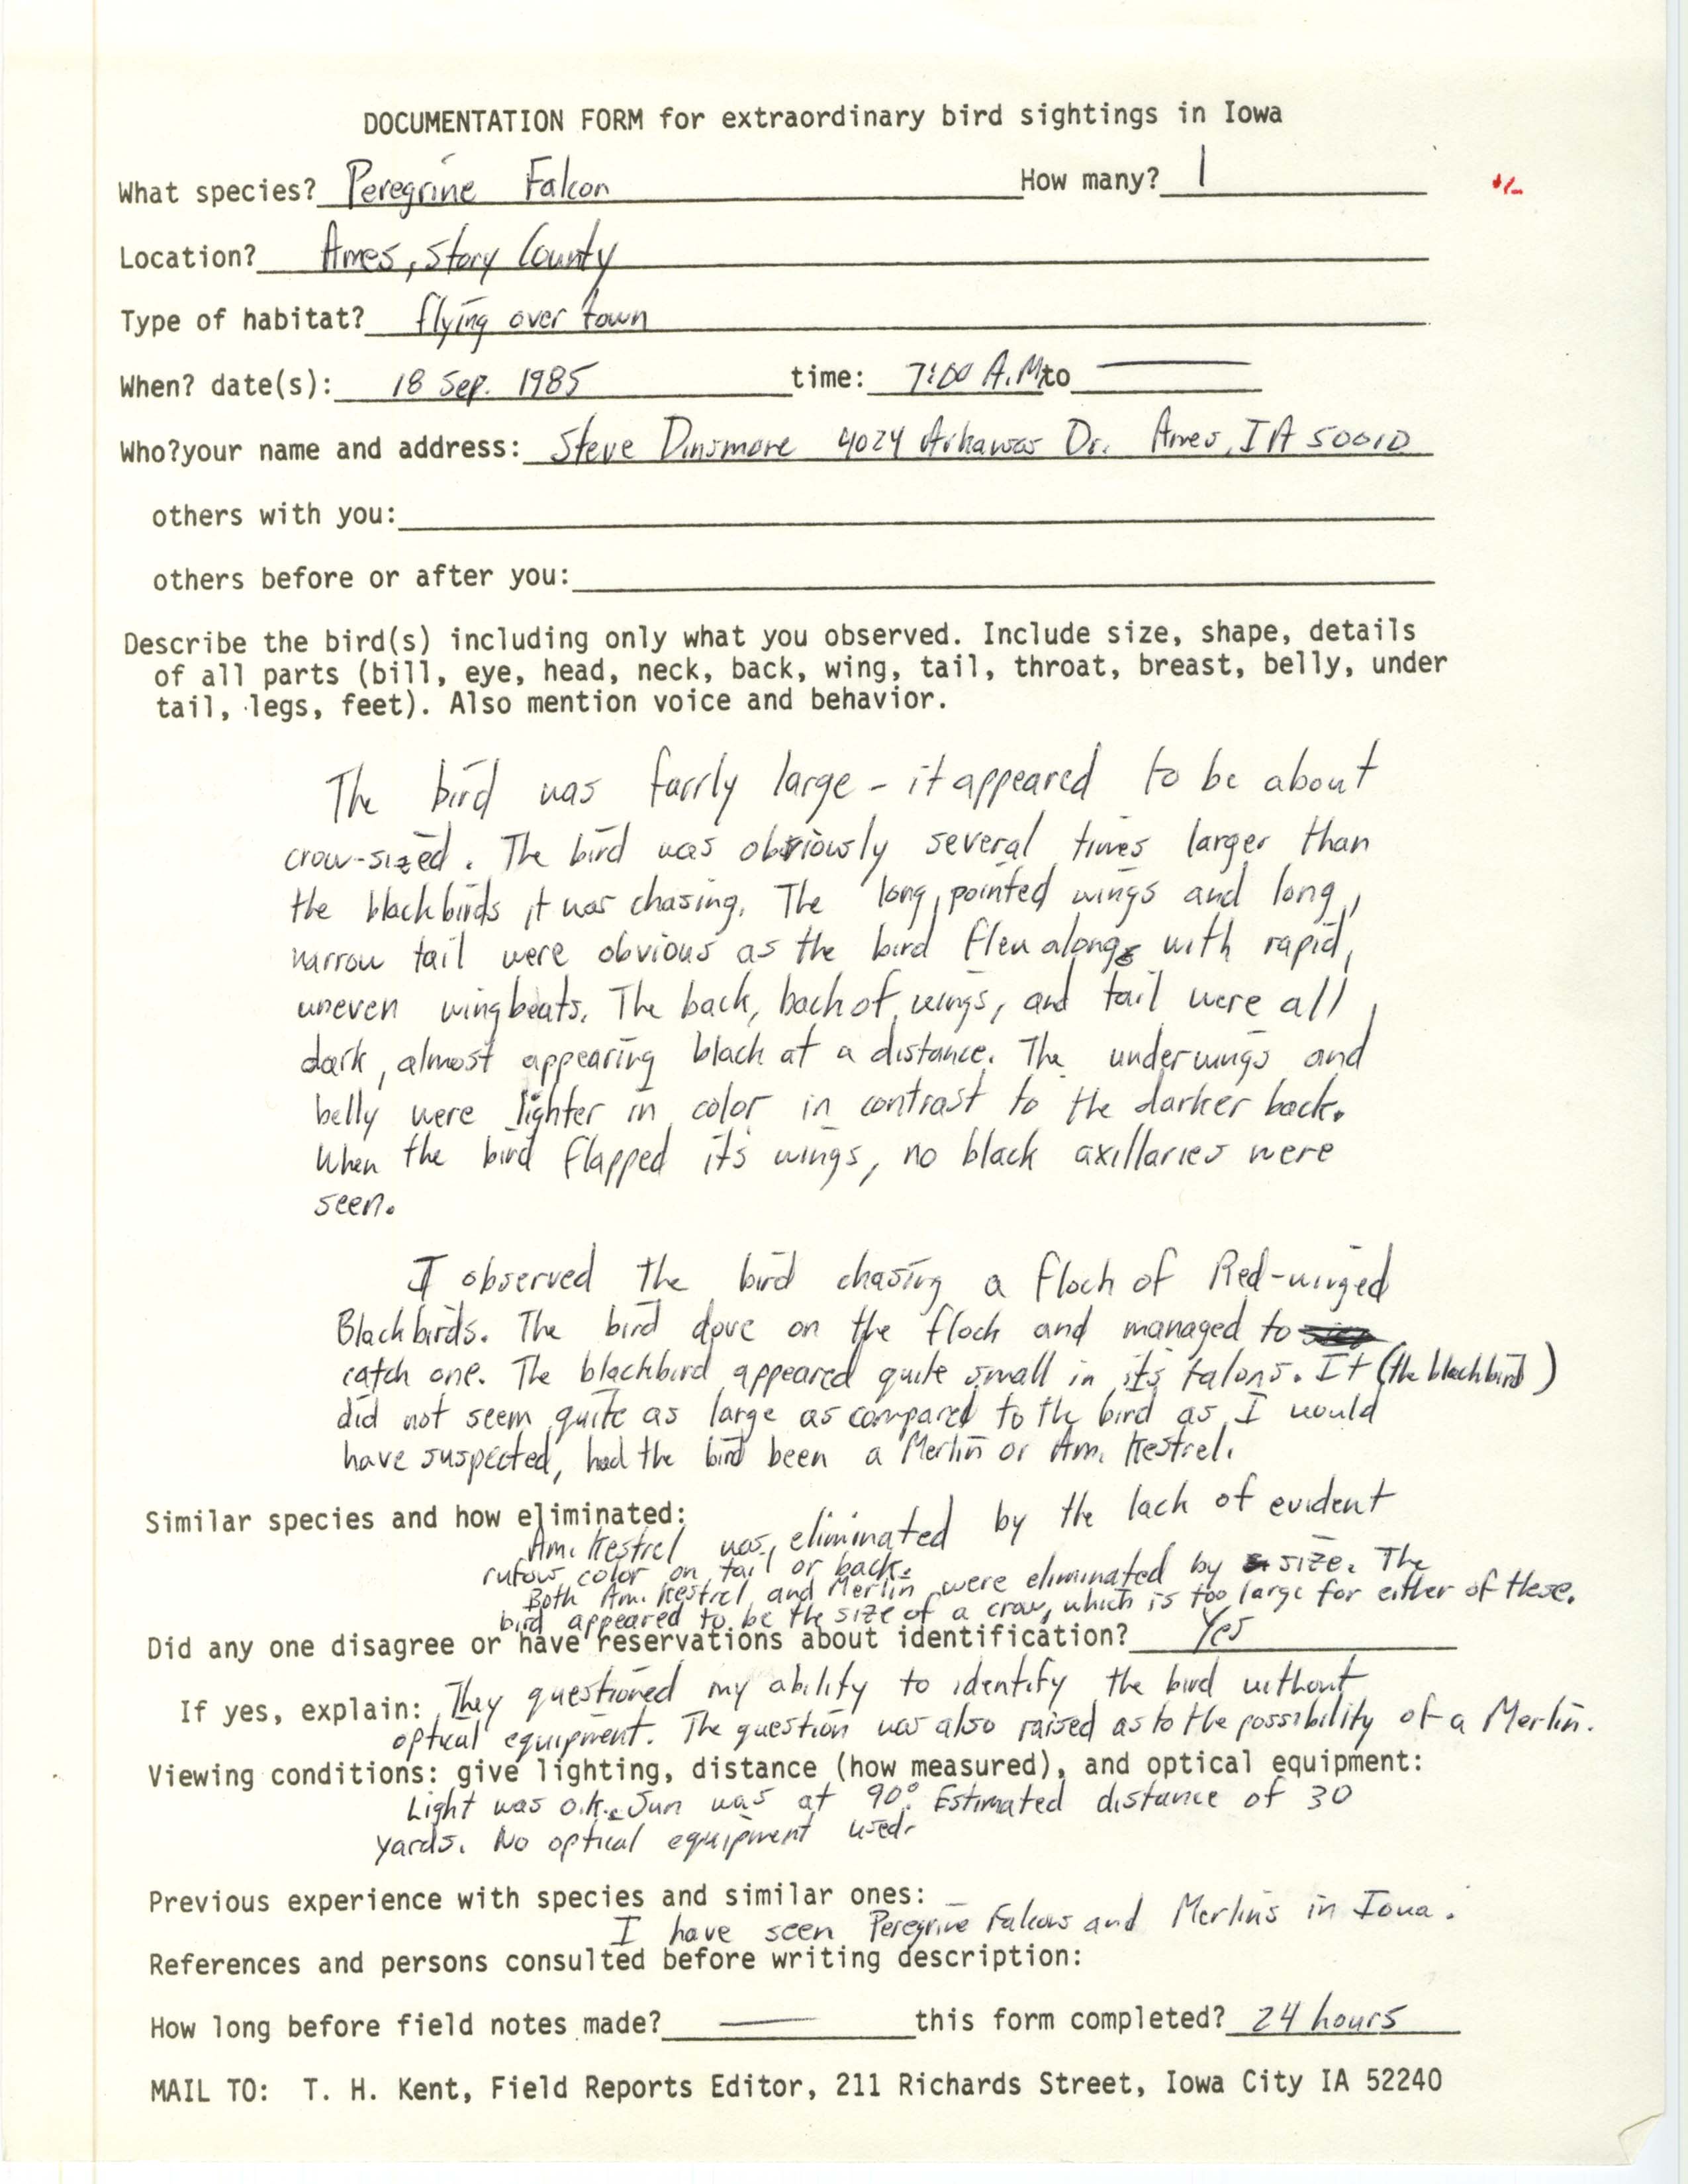 Rare bird documentation form for Peregrine Falcon at Ames, 1985